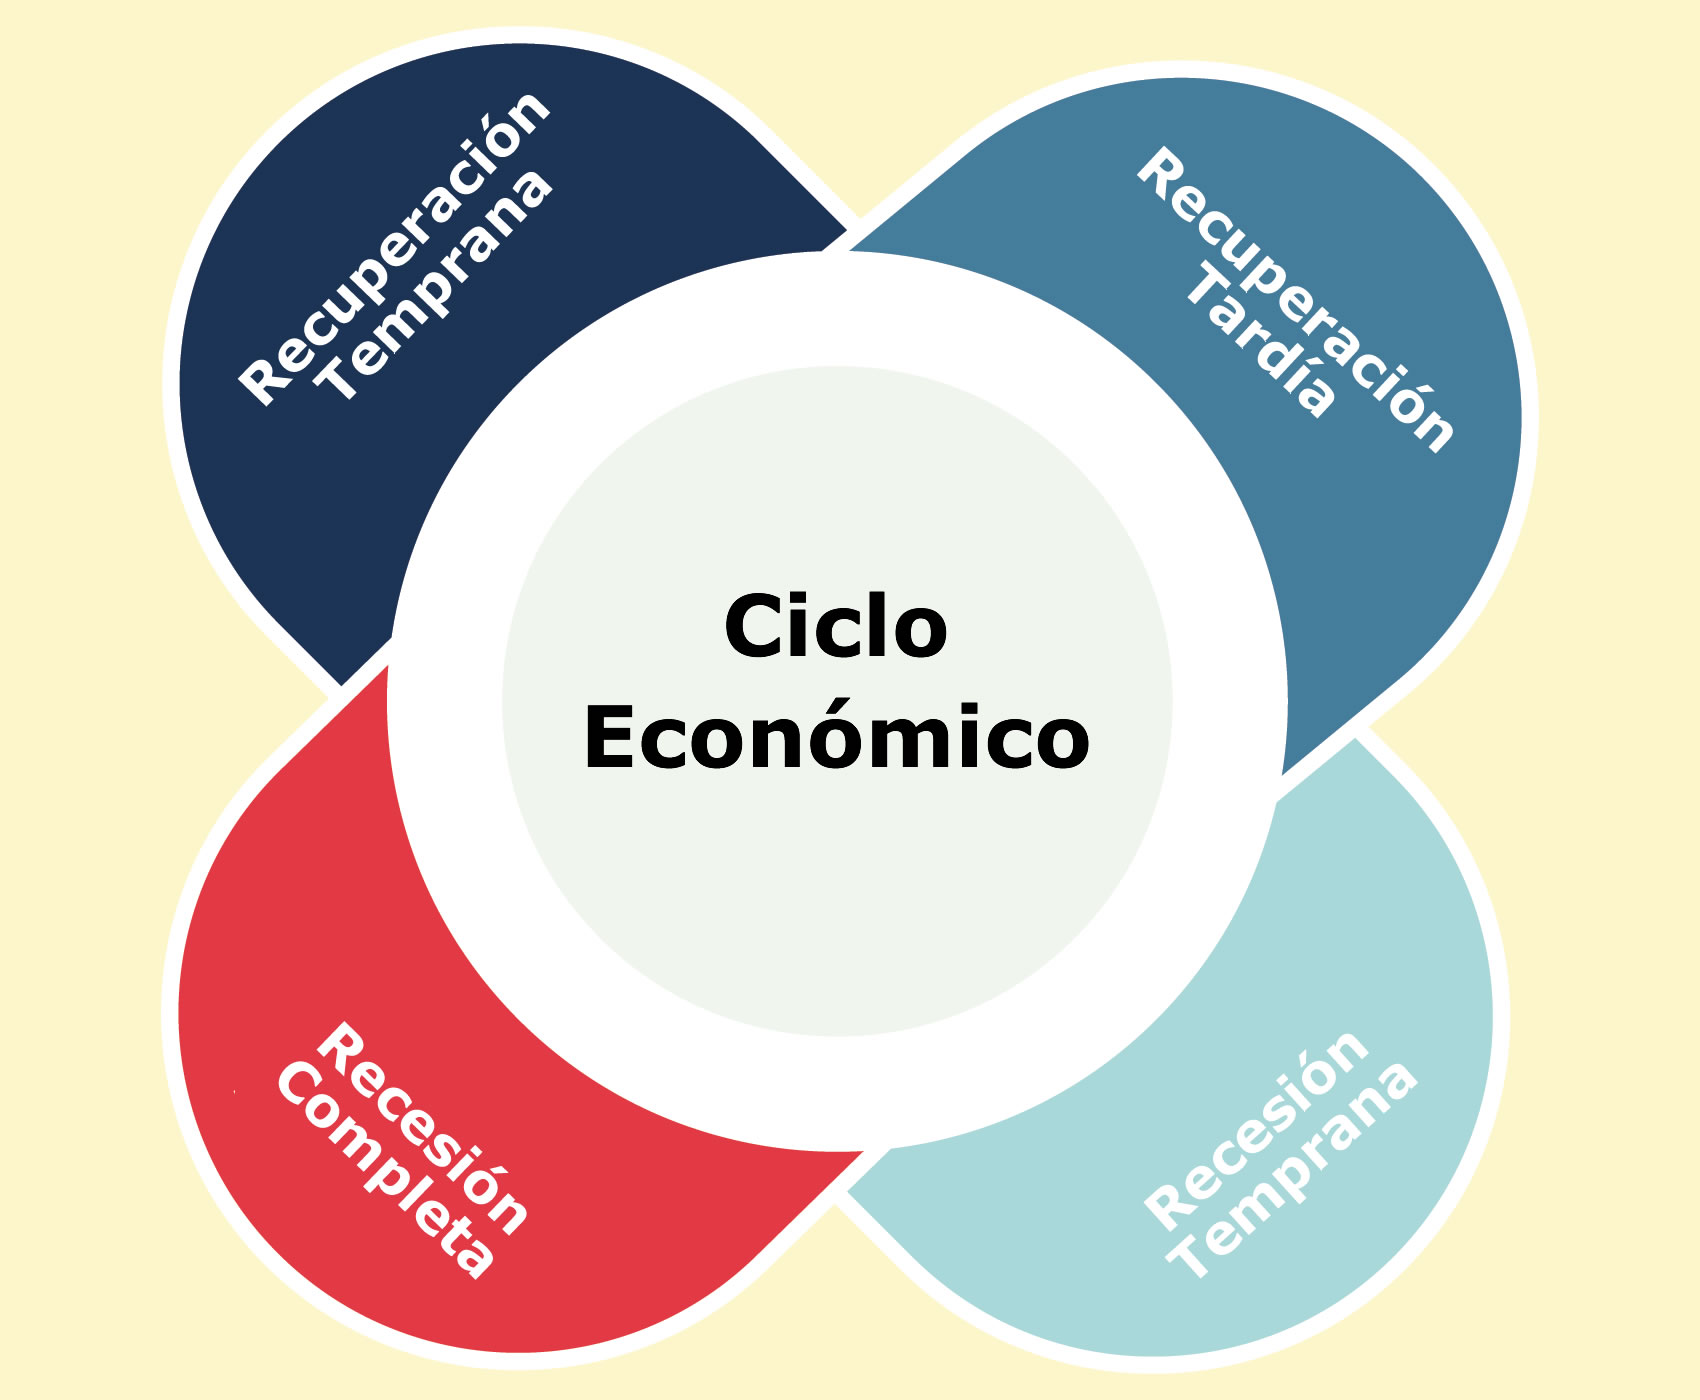 Ciclo Economico Fases